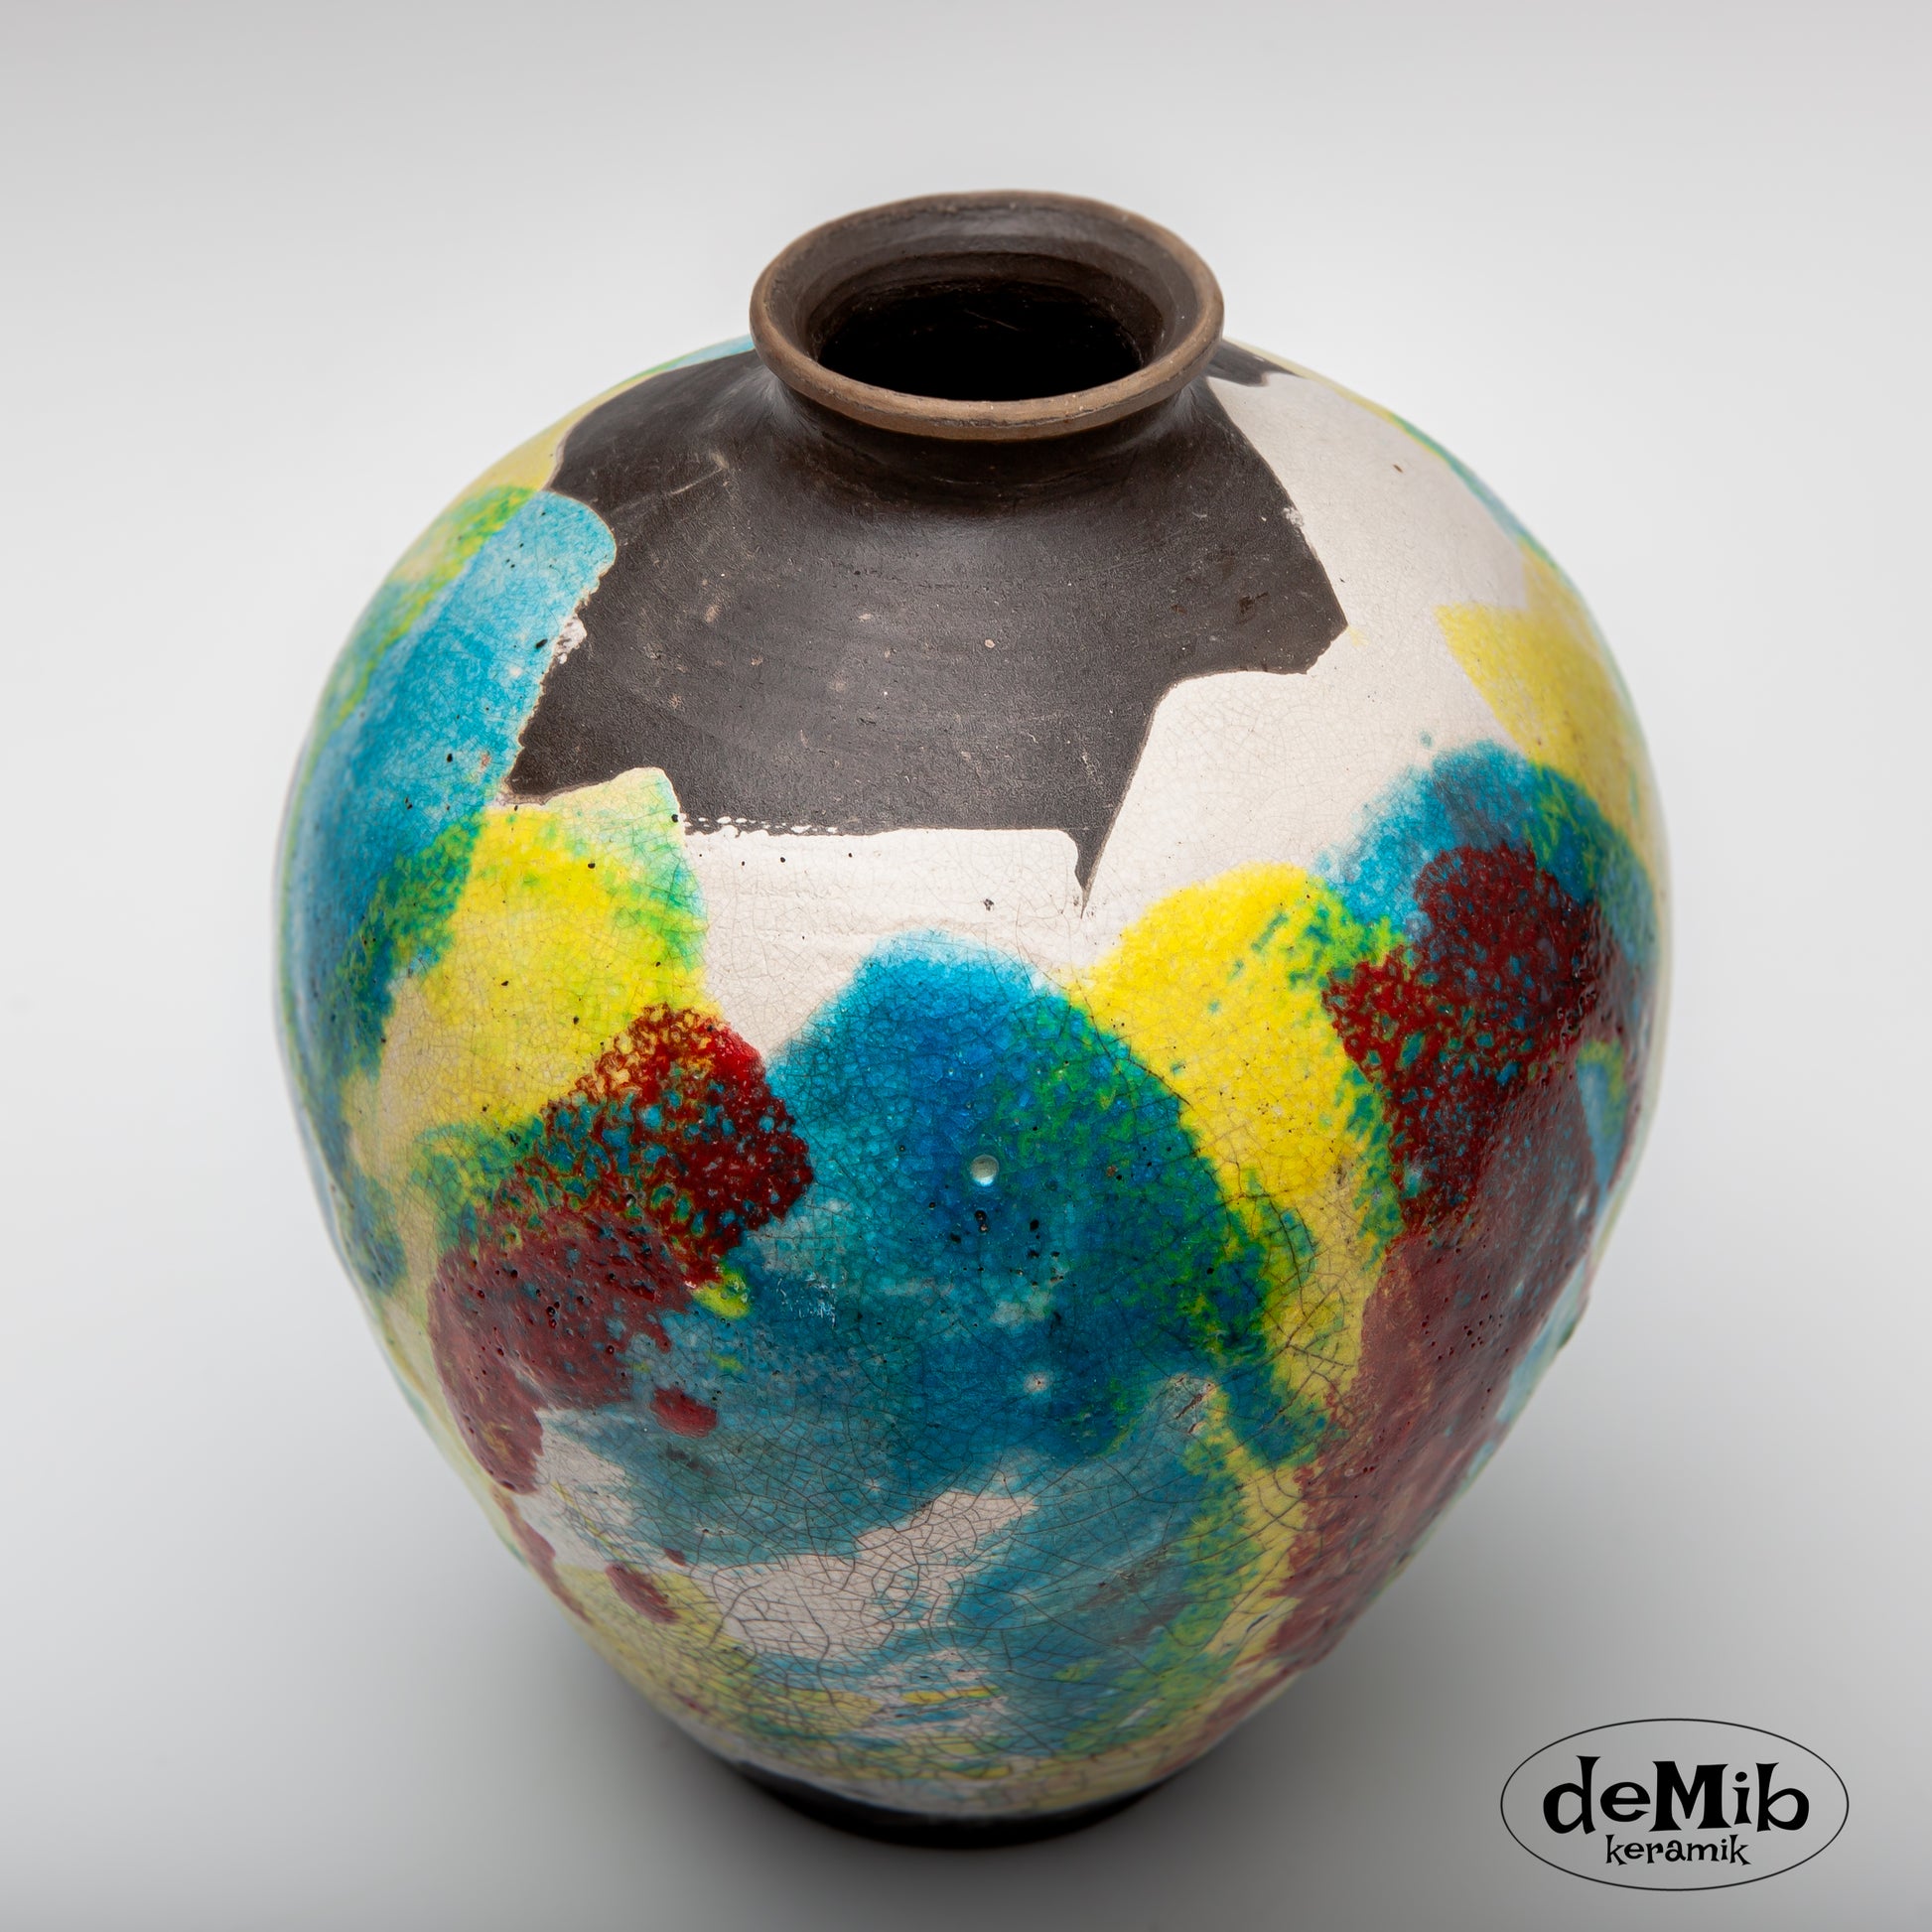 Round Raku Fired Vase with Vivid Colors (22 cm)